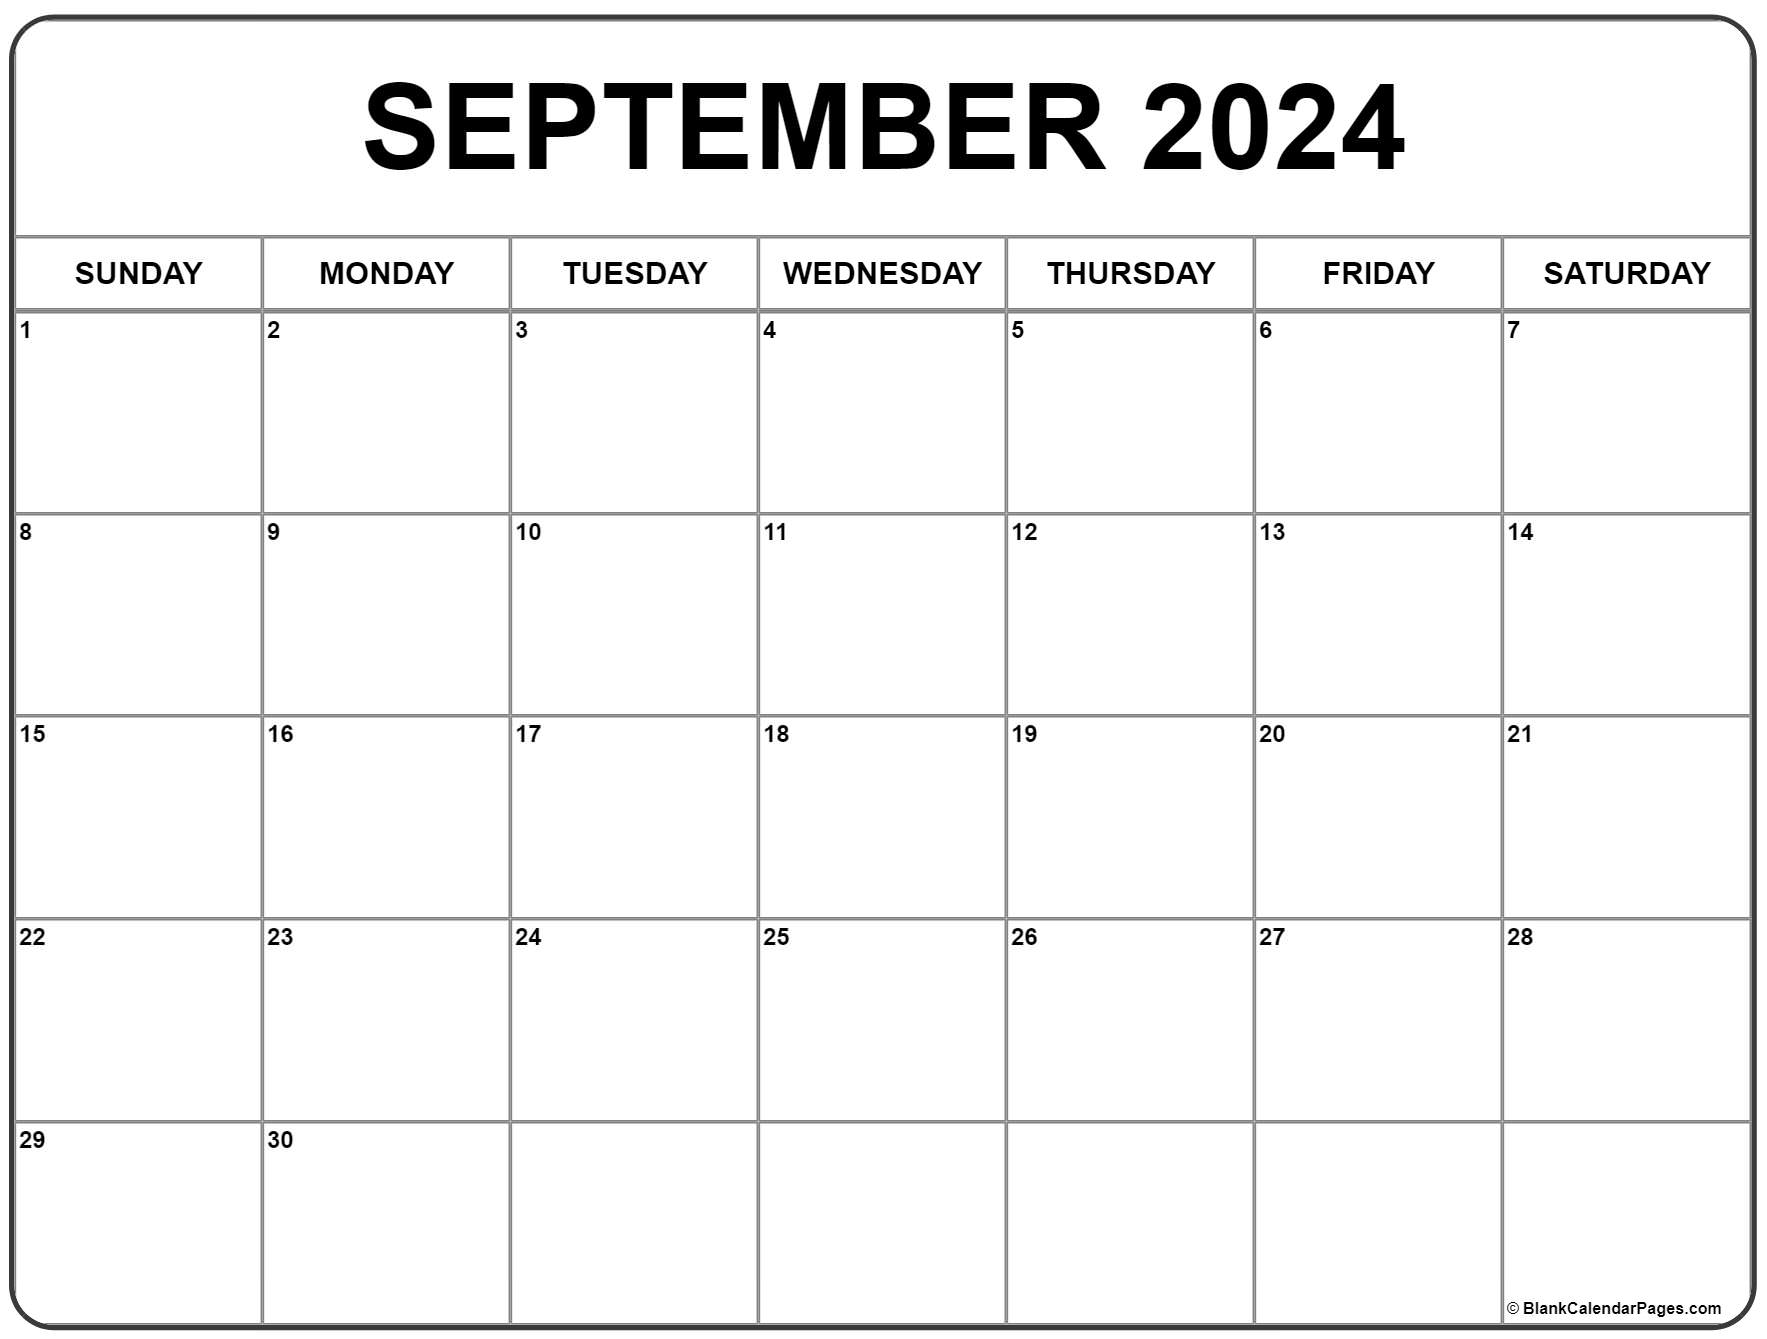 September 2024 Calendar | Free Printable Calendar for Free Printable September 2024 Calendar